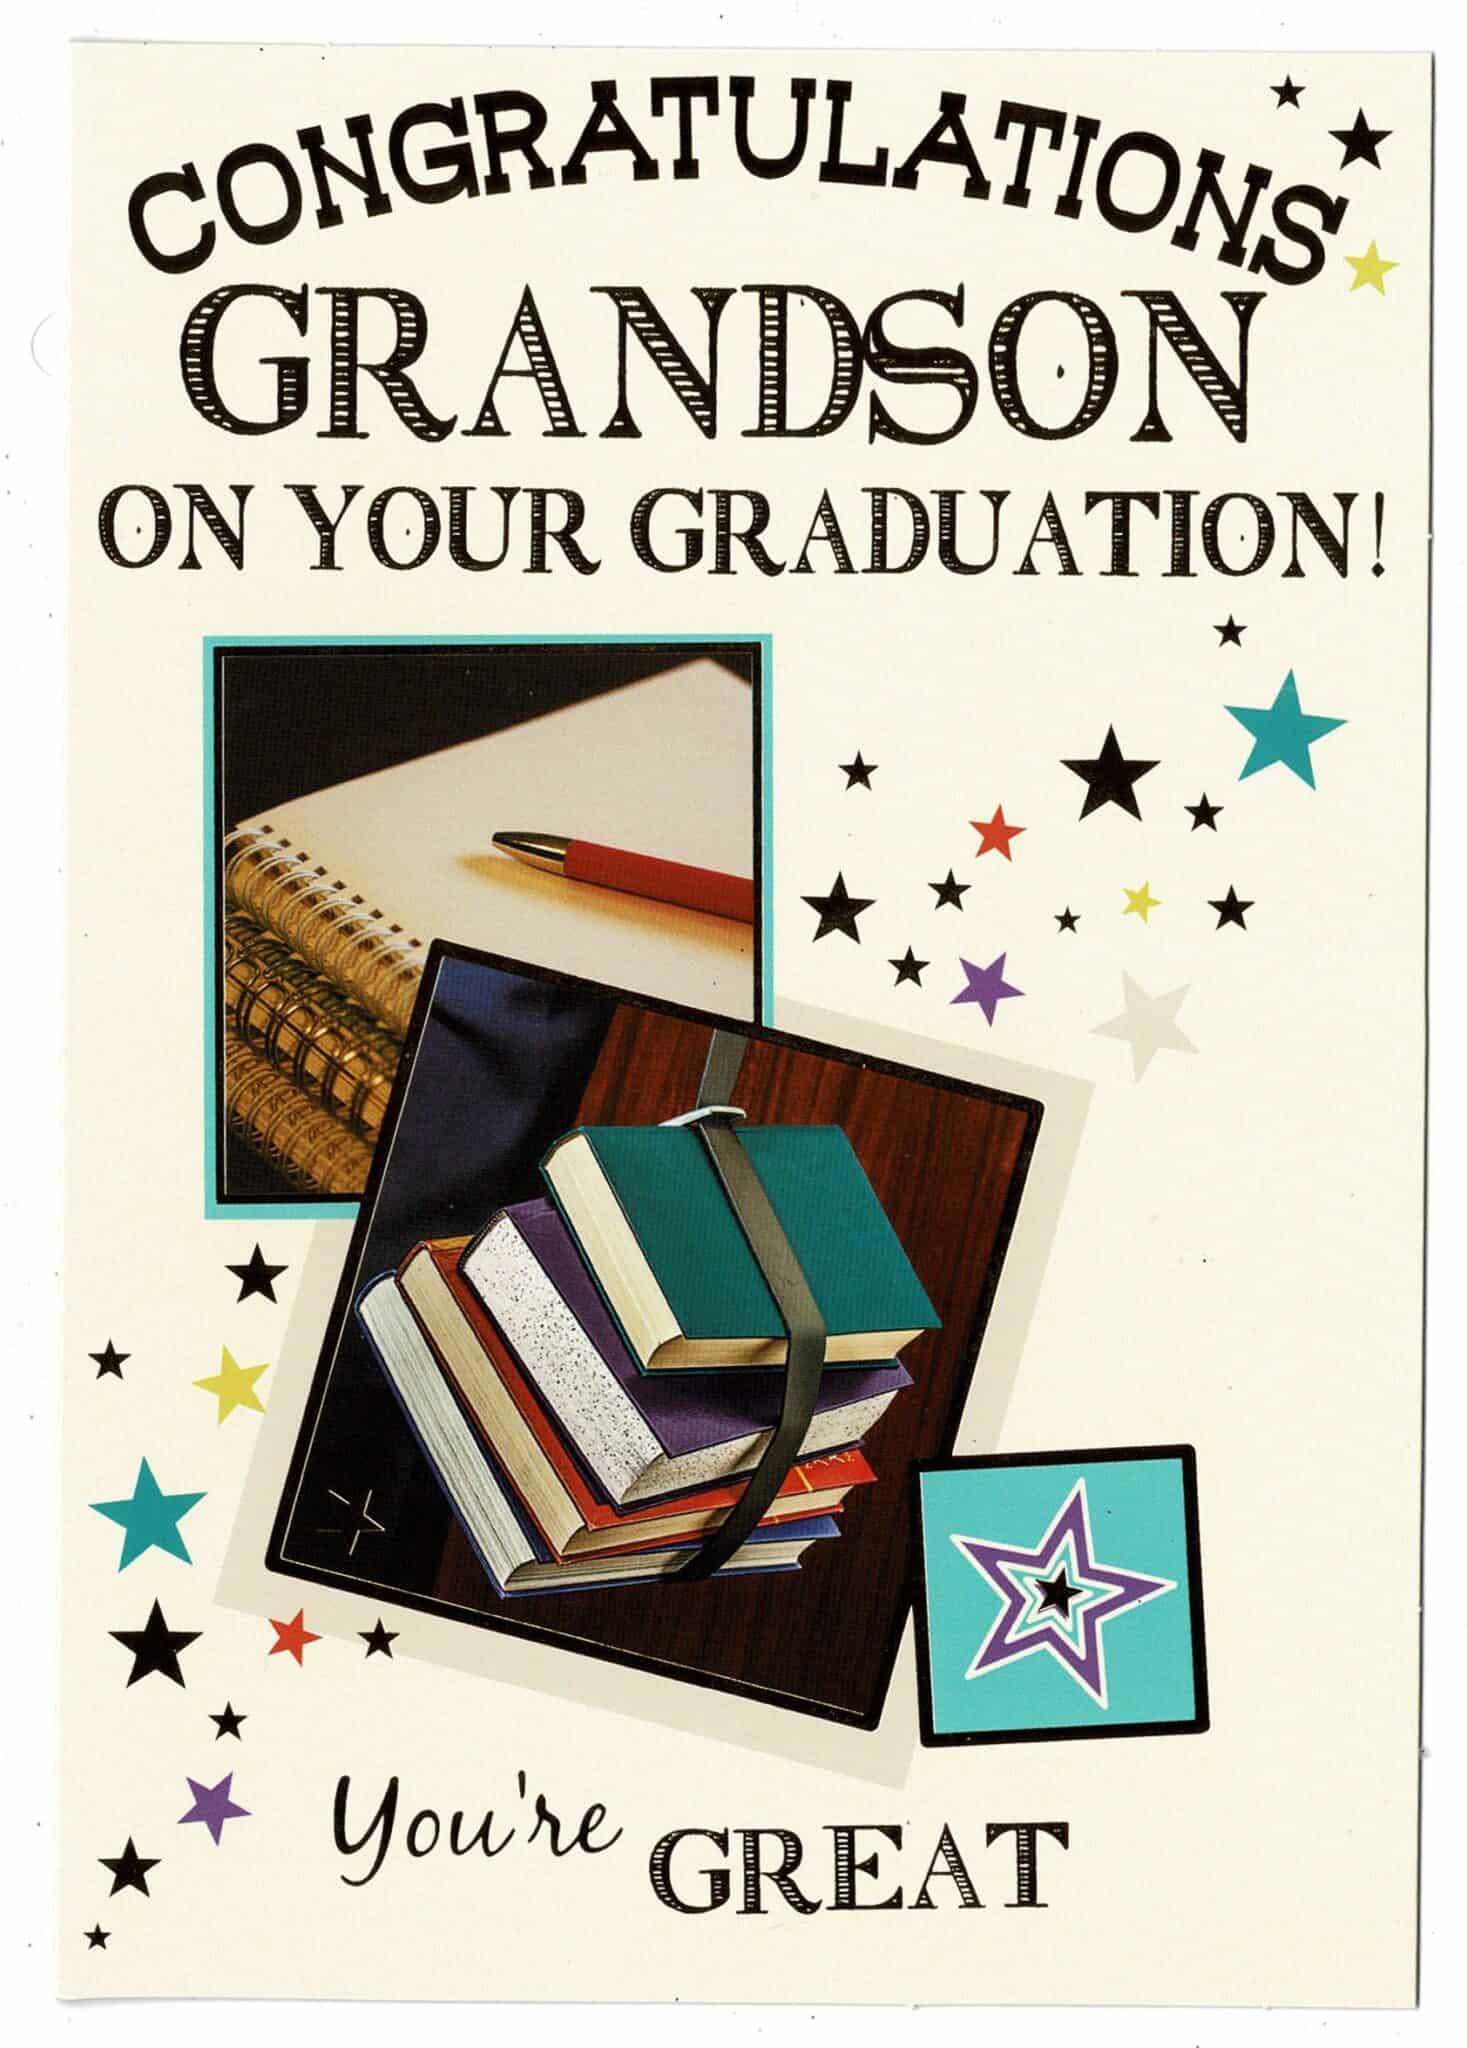 grandson-graduation-card-congratulations-grandson-on-your-graduation